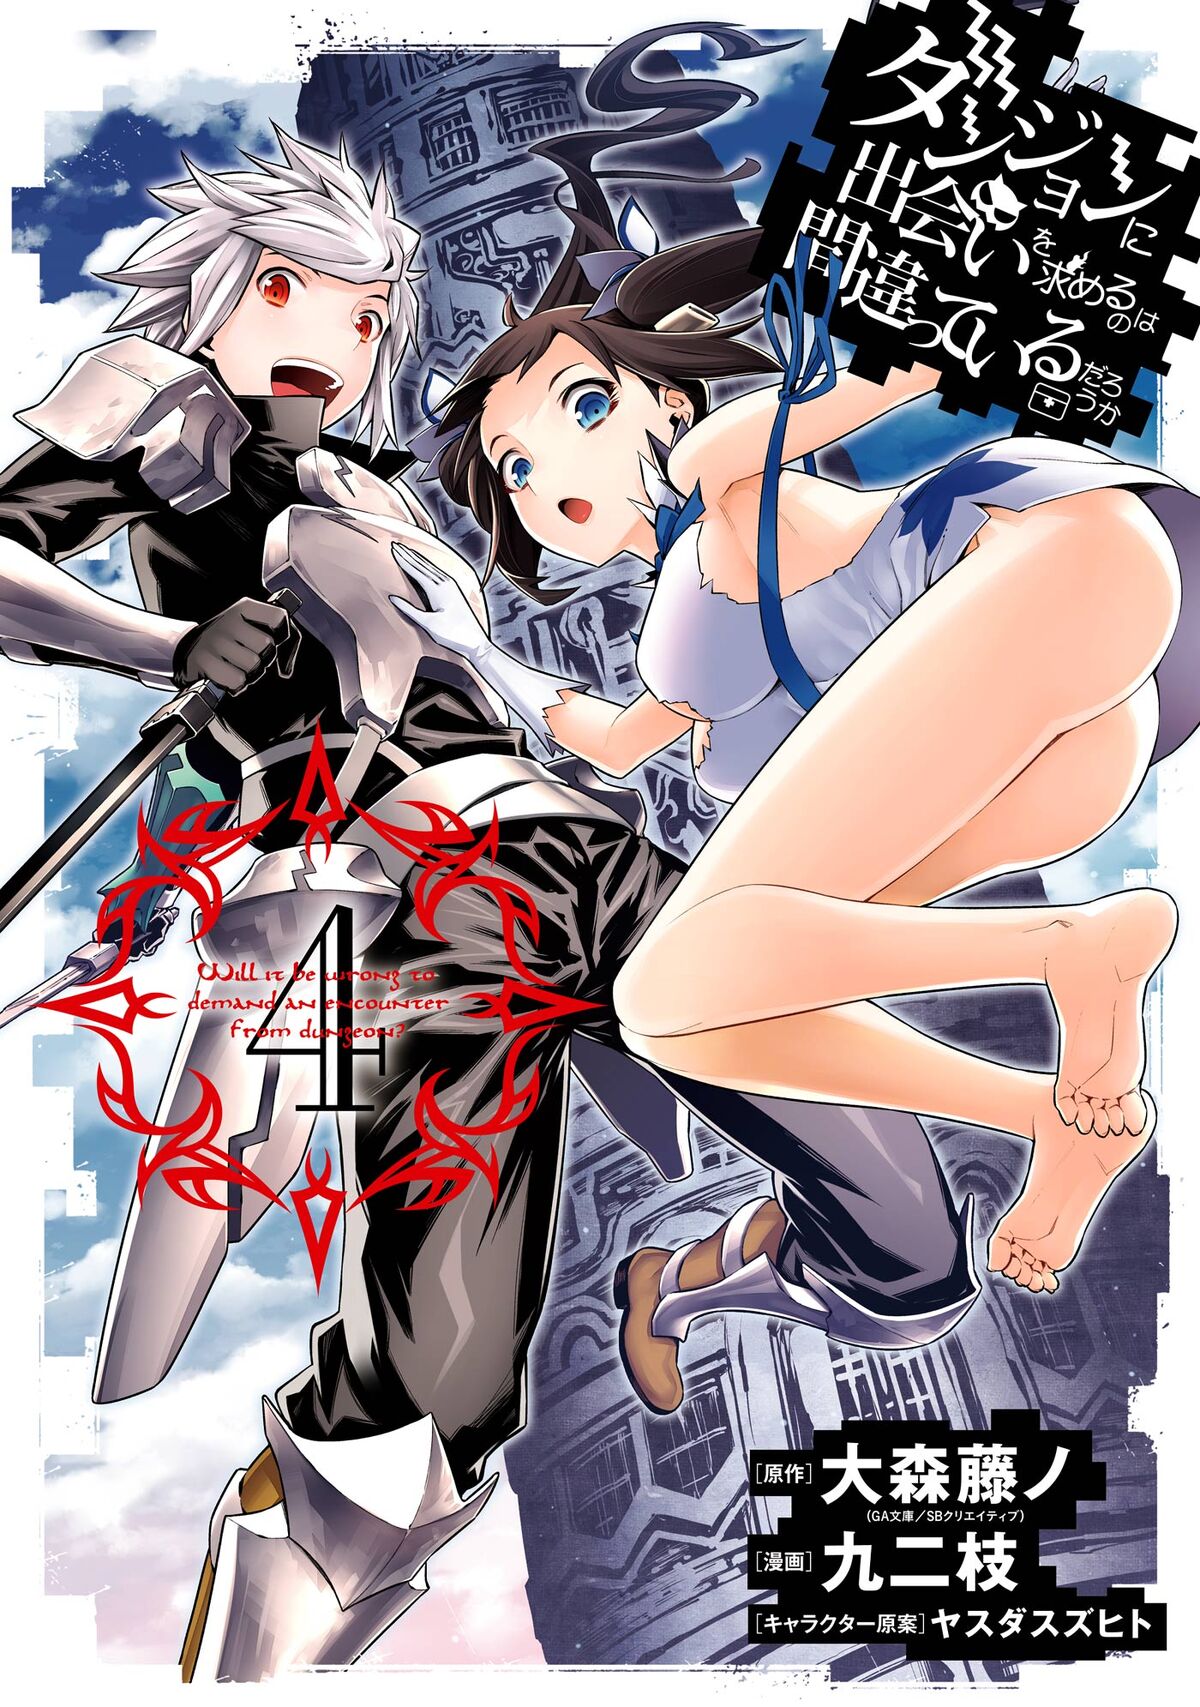 DanMachi Manga Volume 4, DanMachi Wiki